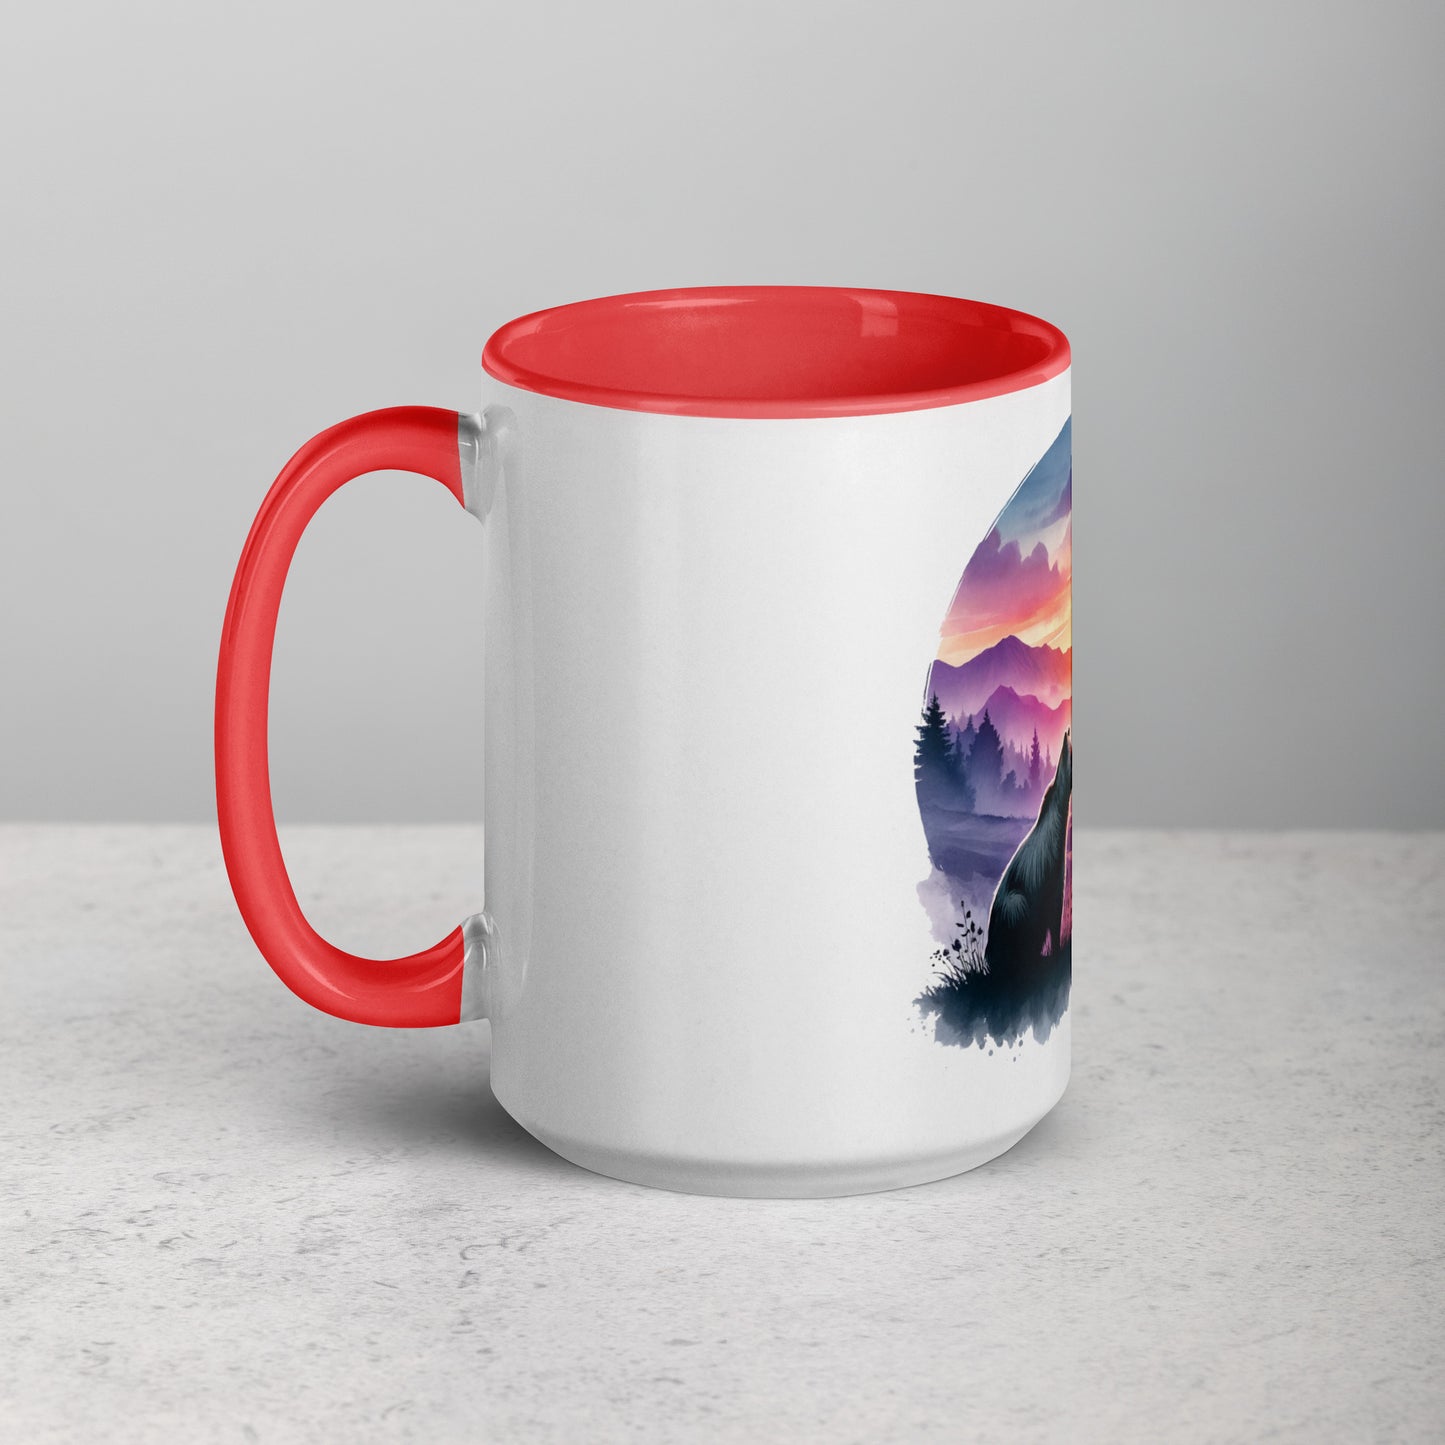 "A Smoky Sunset" mug